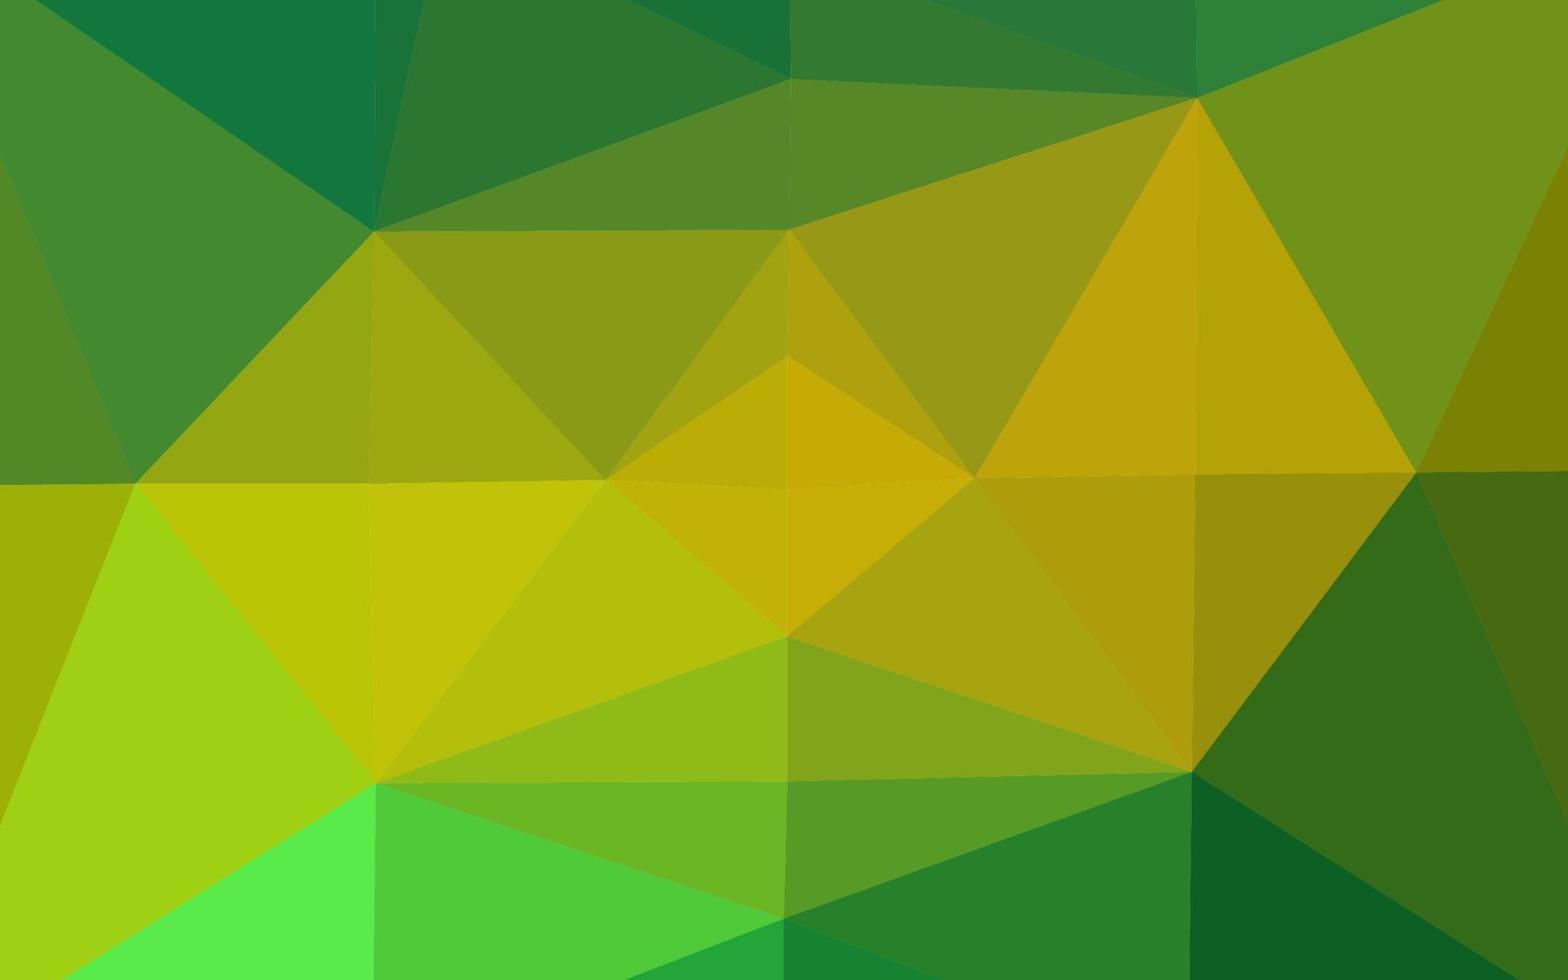 Light Green, Yellow vector shining triangular background.